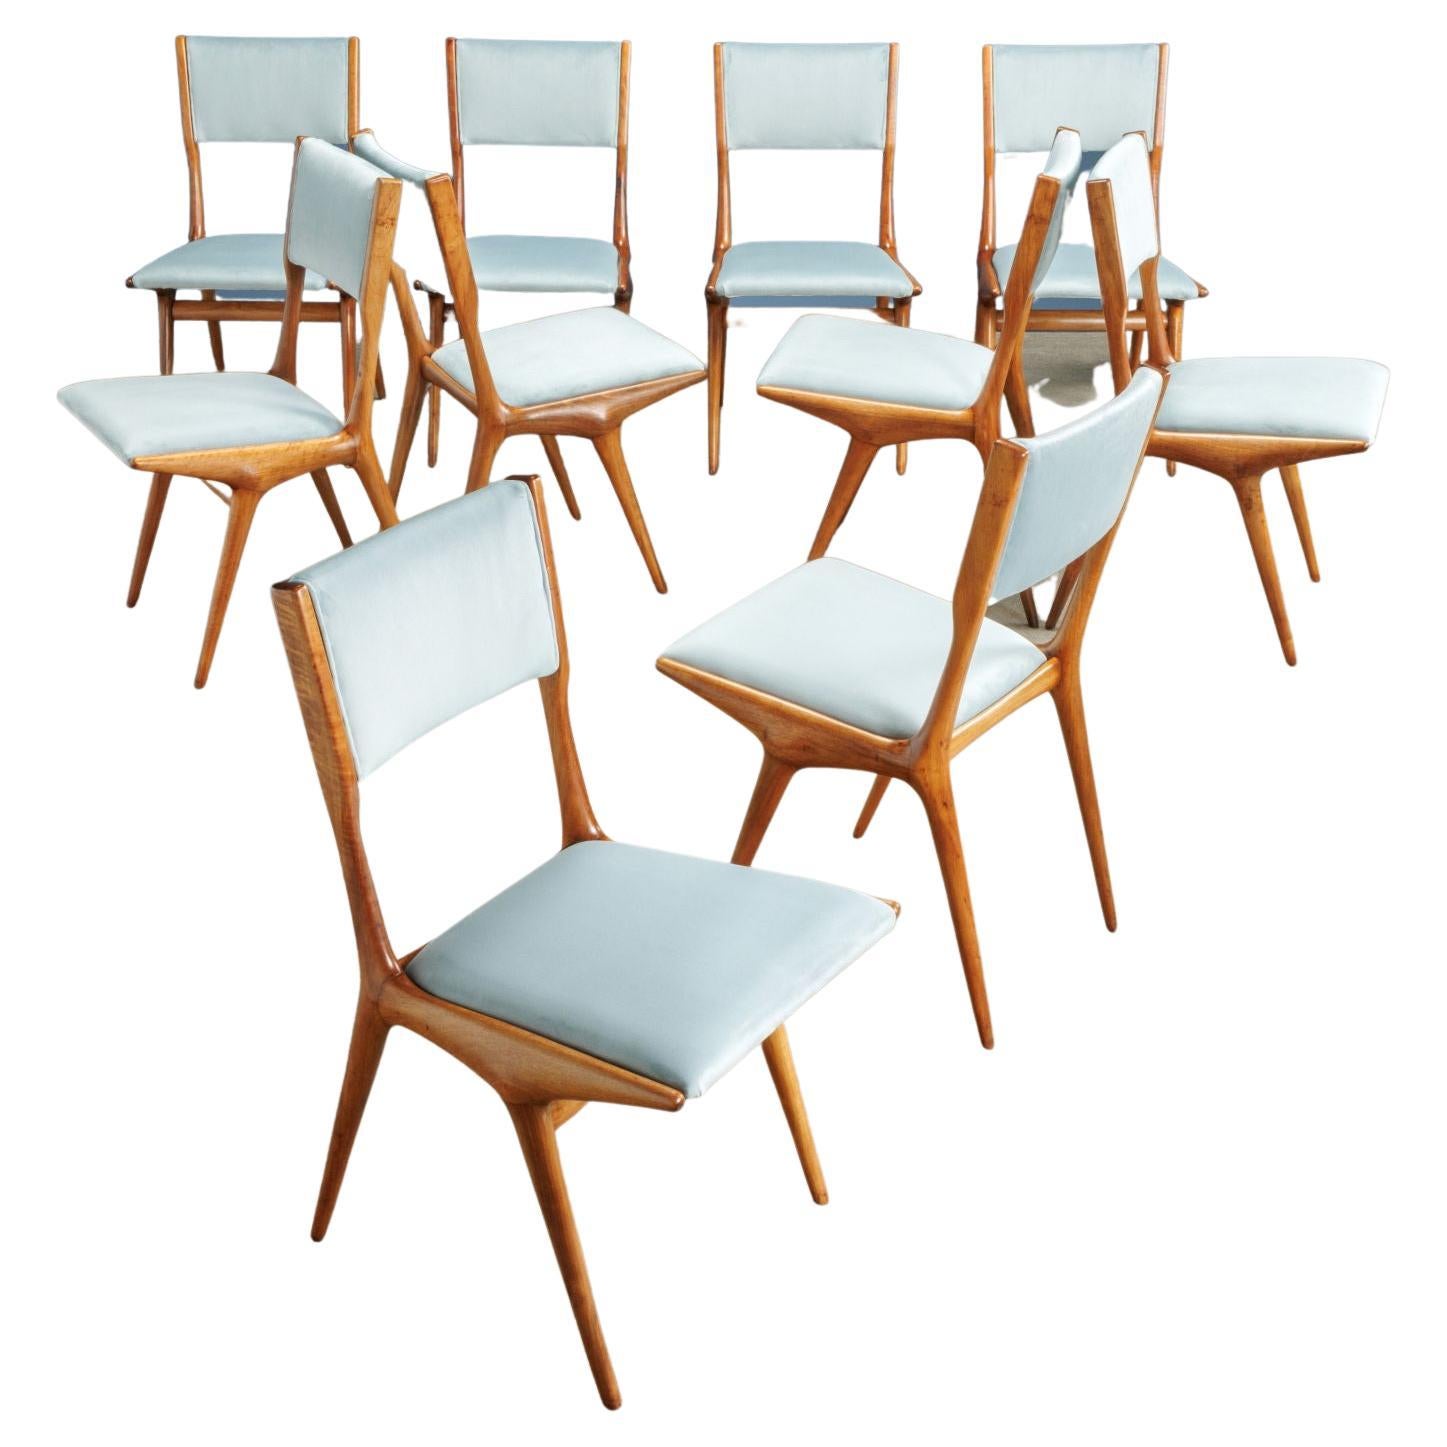 '634' Carlo de Carli Chairs for Cassina 1950s-60s